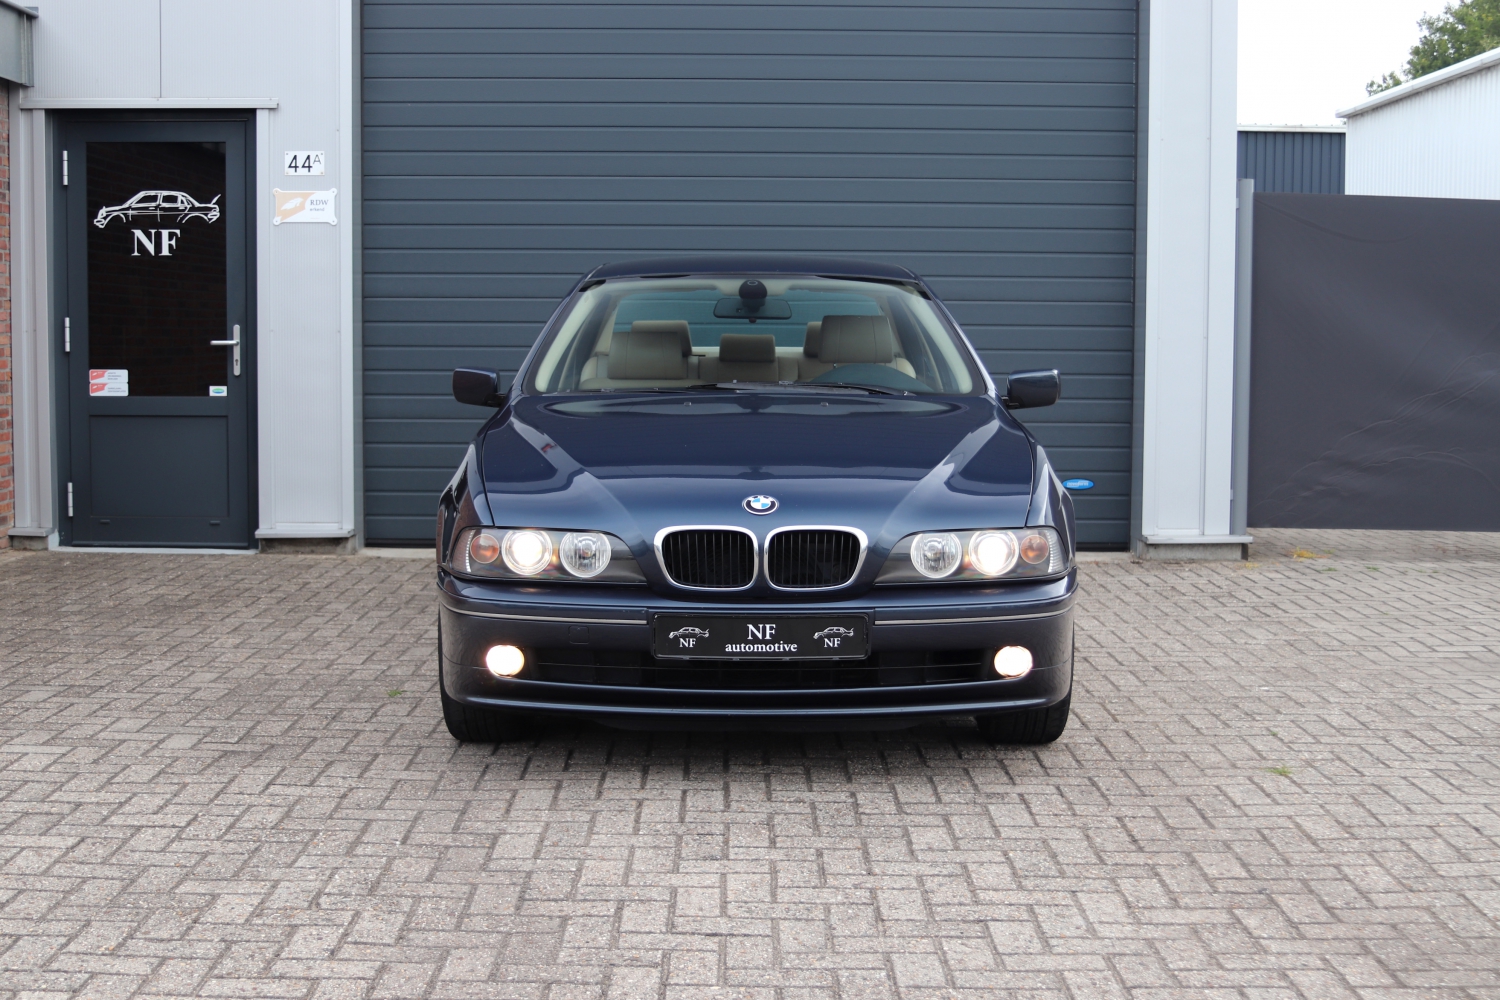 BMW-520i-Sedan-E39-2003-41NBNF-002.JPG